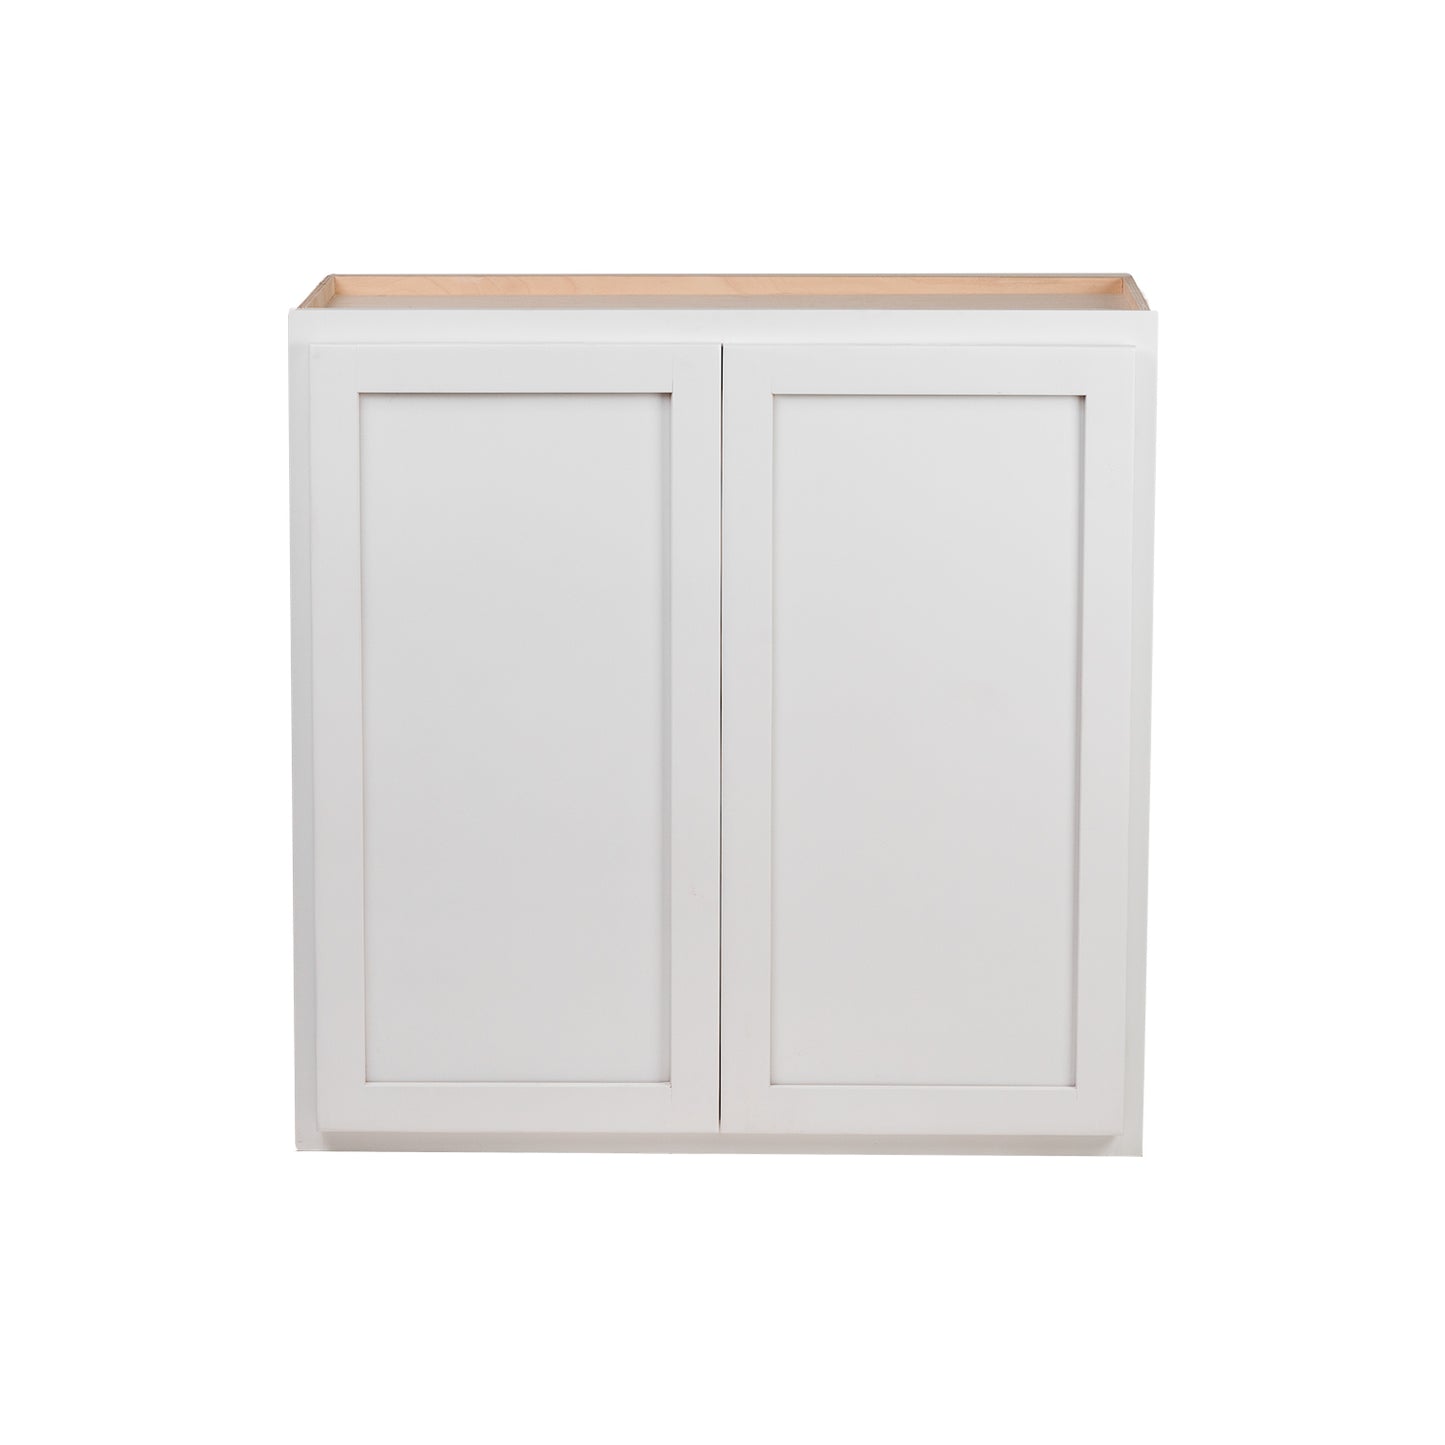 Quicklock RTA (Ready-to-Assemble) Pure White 36"Wx36"Hx12"D Wall Cabinet